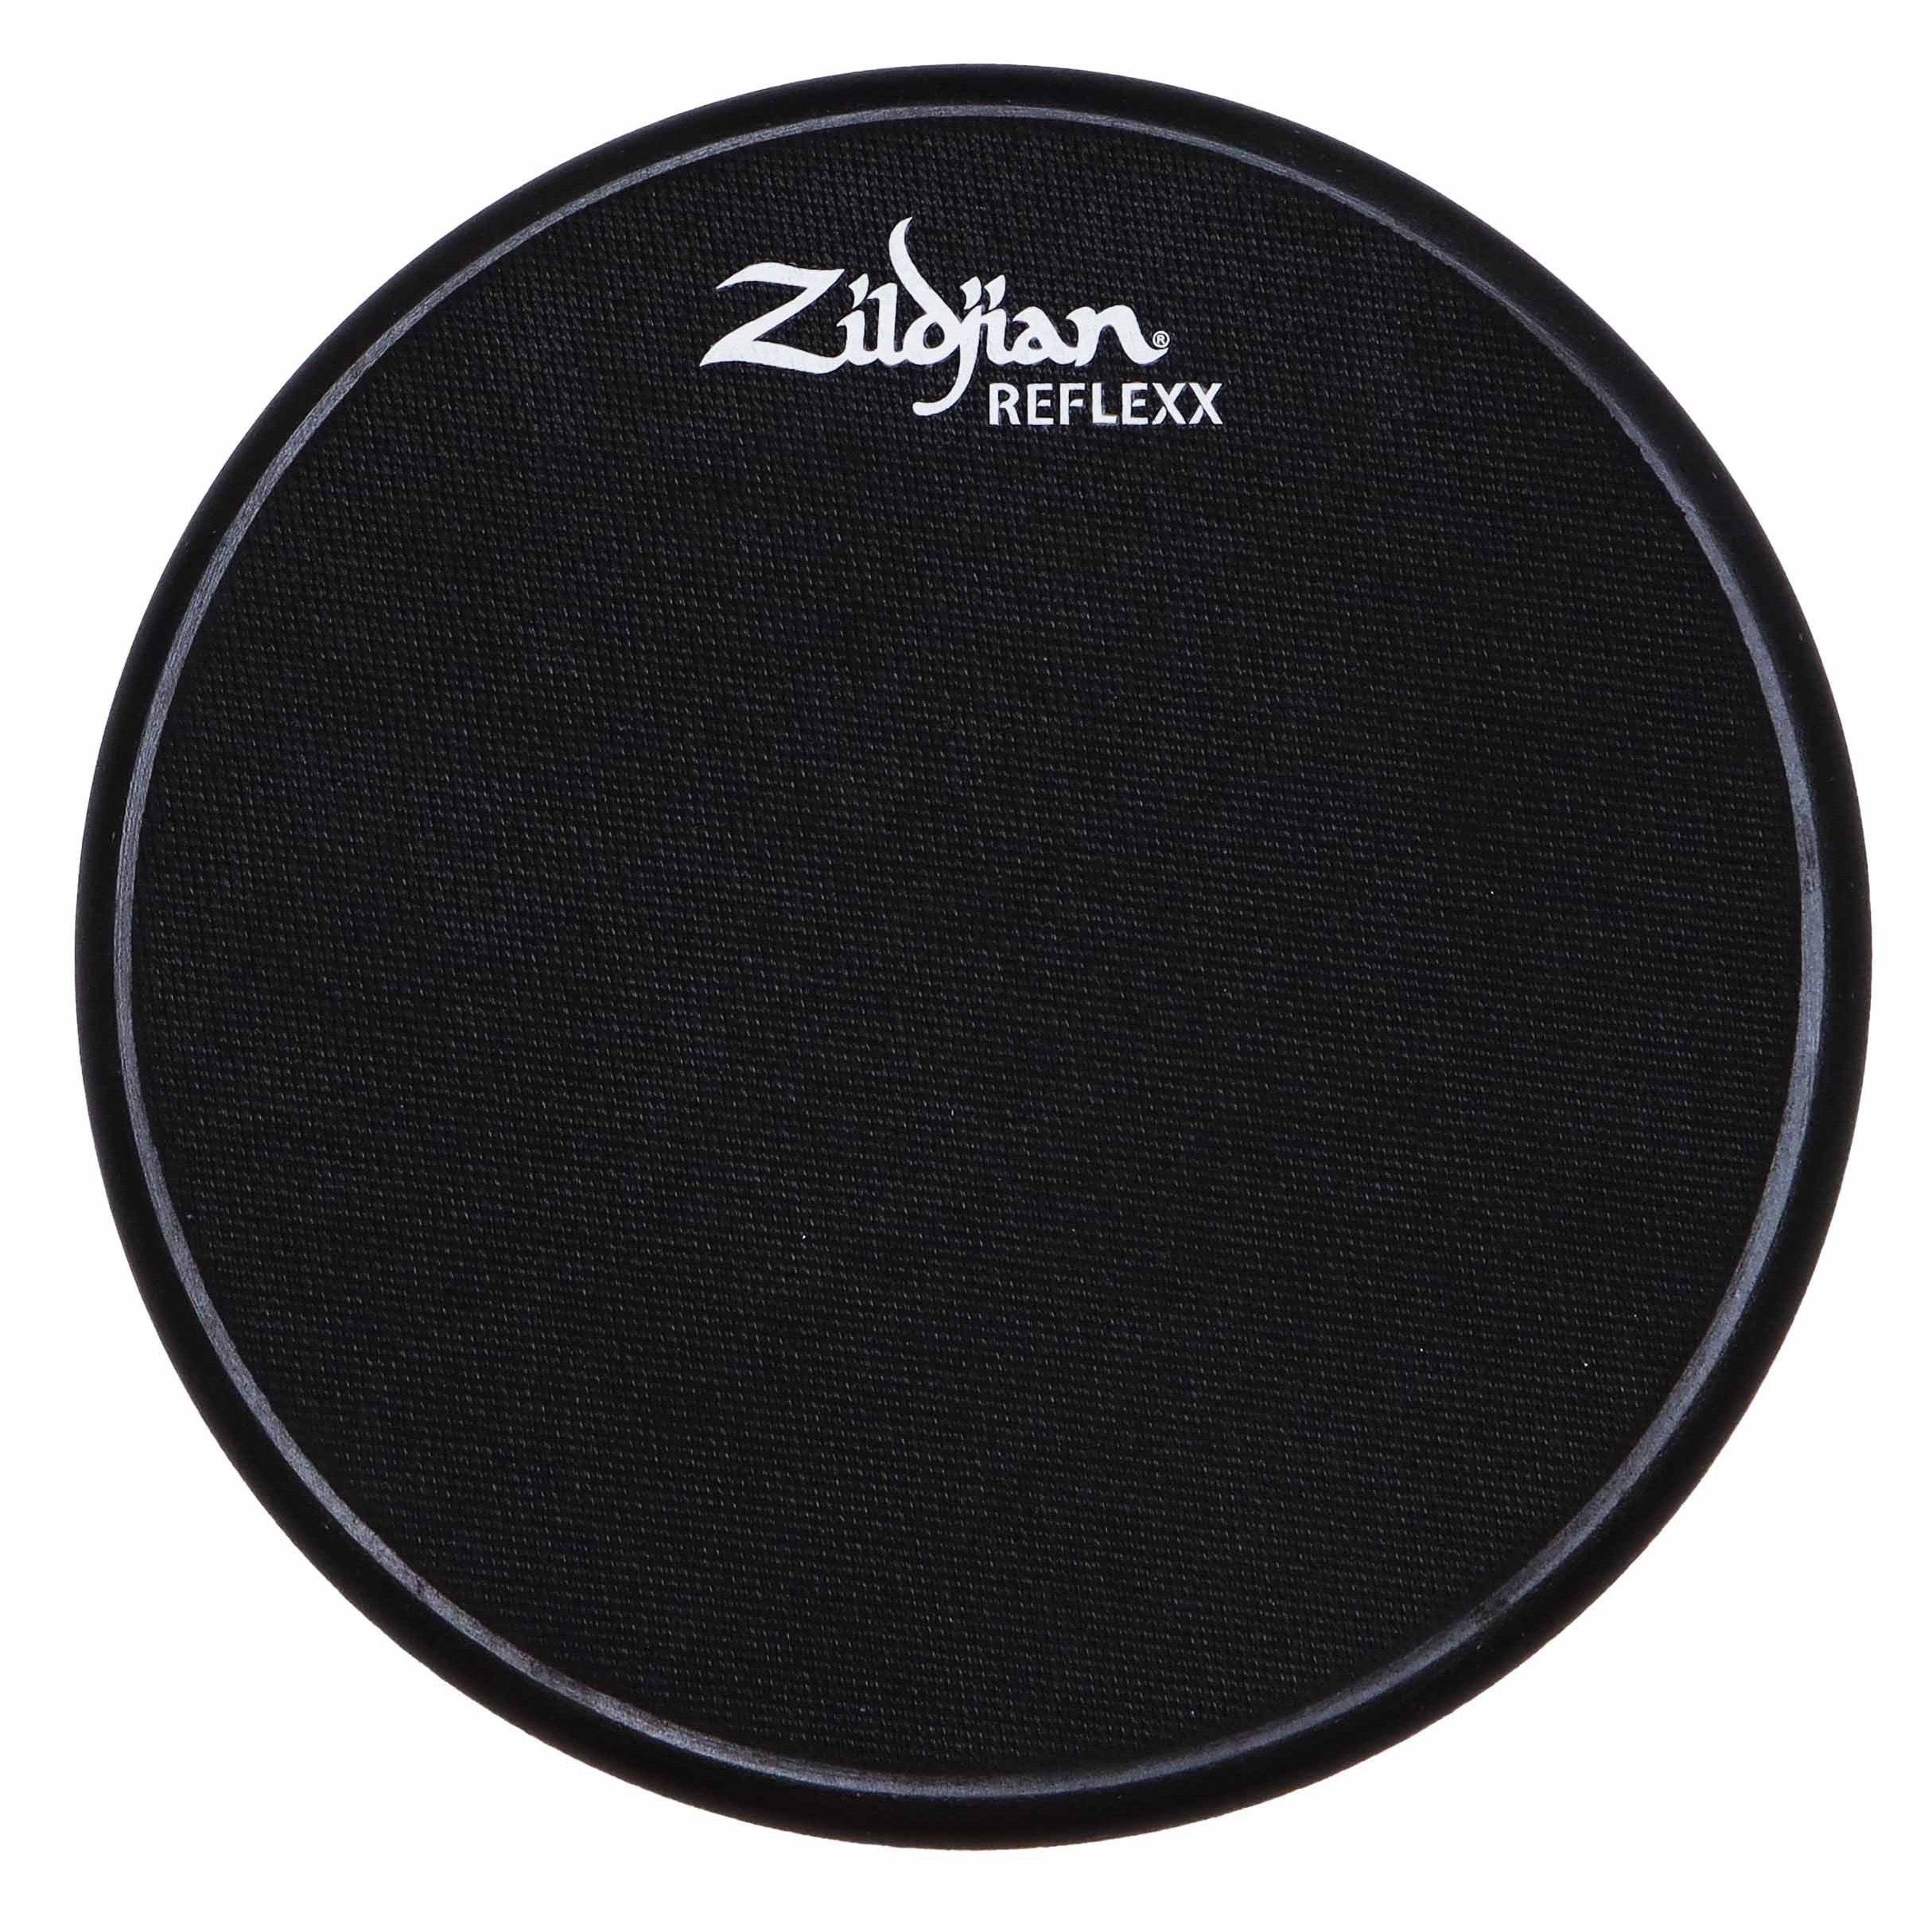 Zildjian ZXPPRCP10 Conditioning Reflexx Pad Тренировочные наборы и пэды